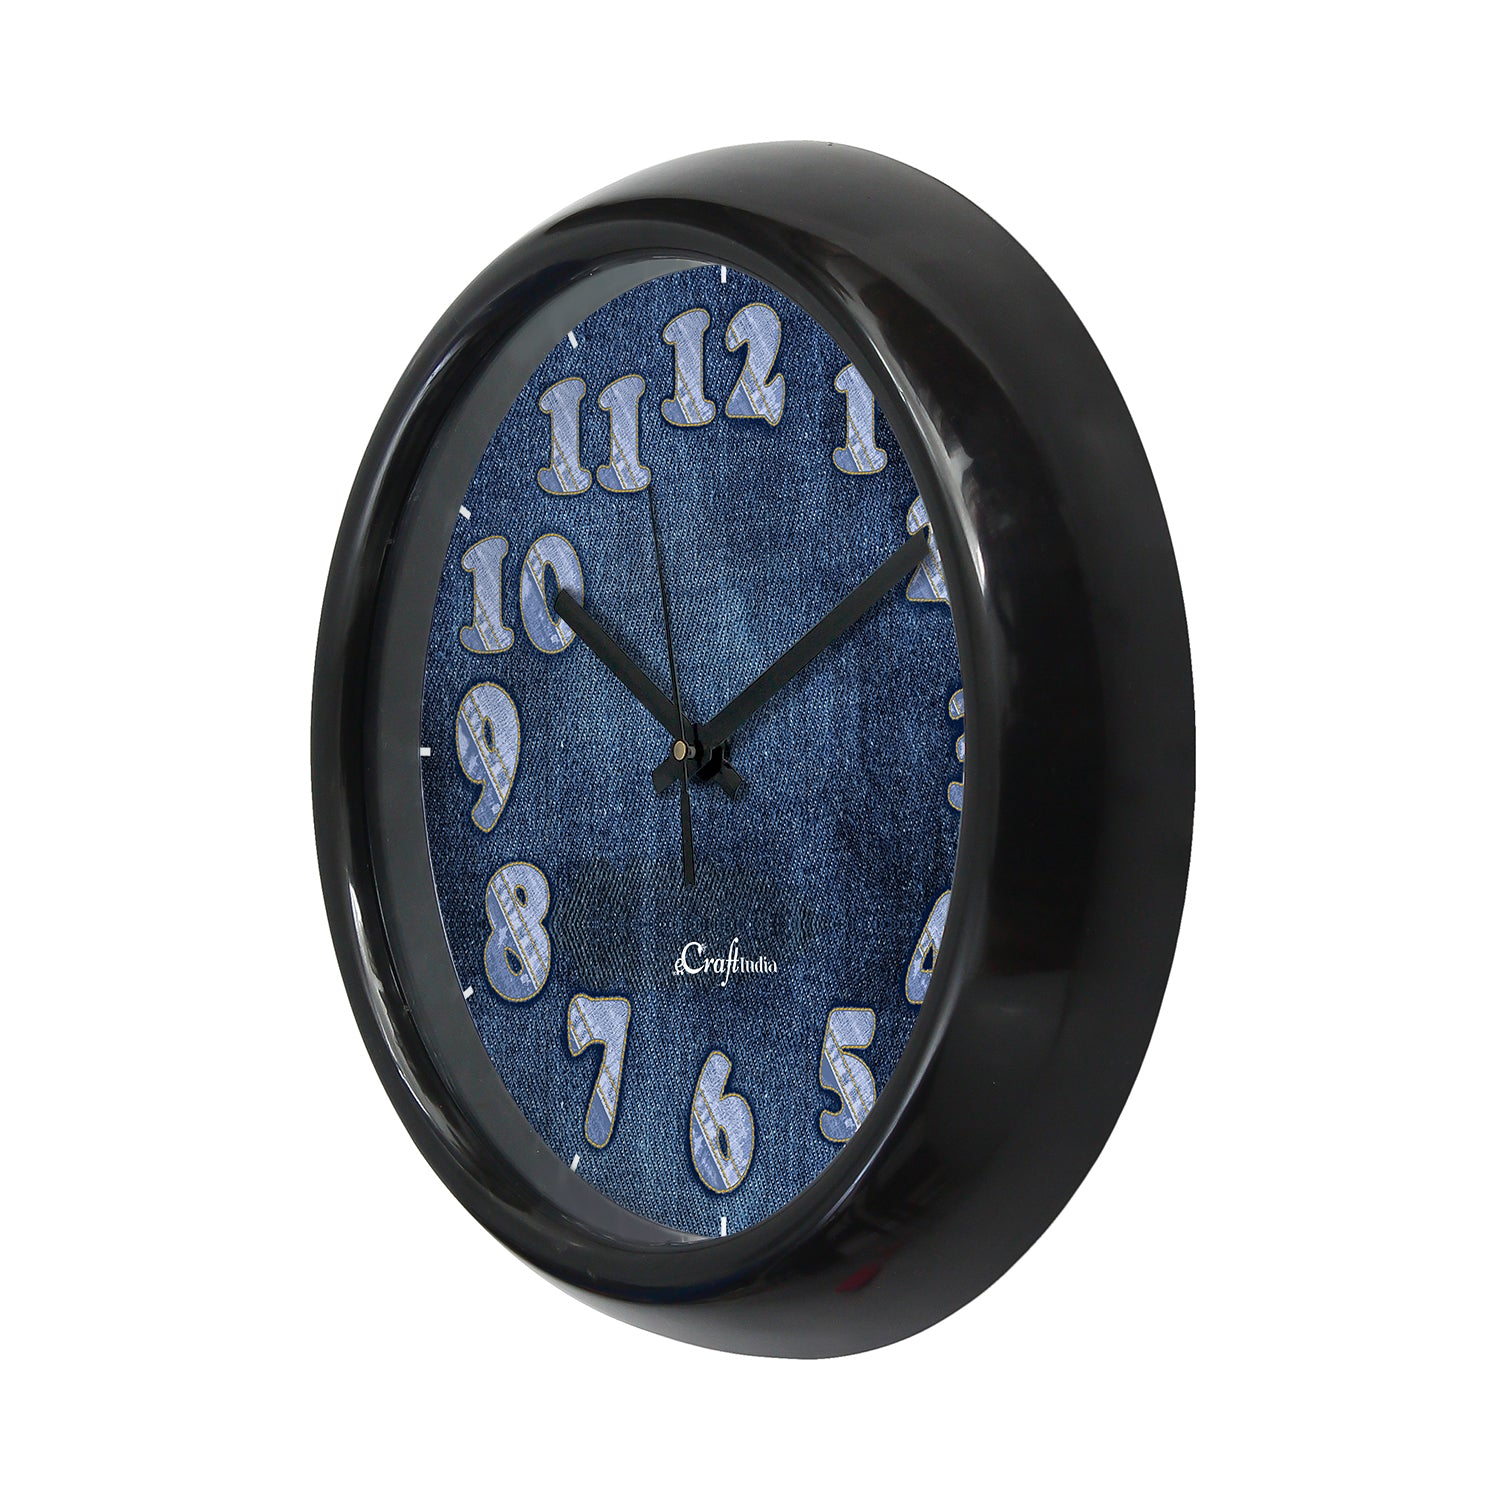 Demin Look Round Shape Analog Designer Wall Clock 4